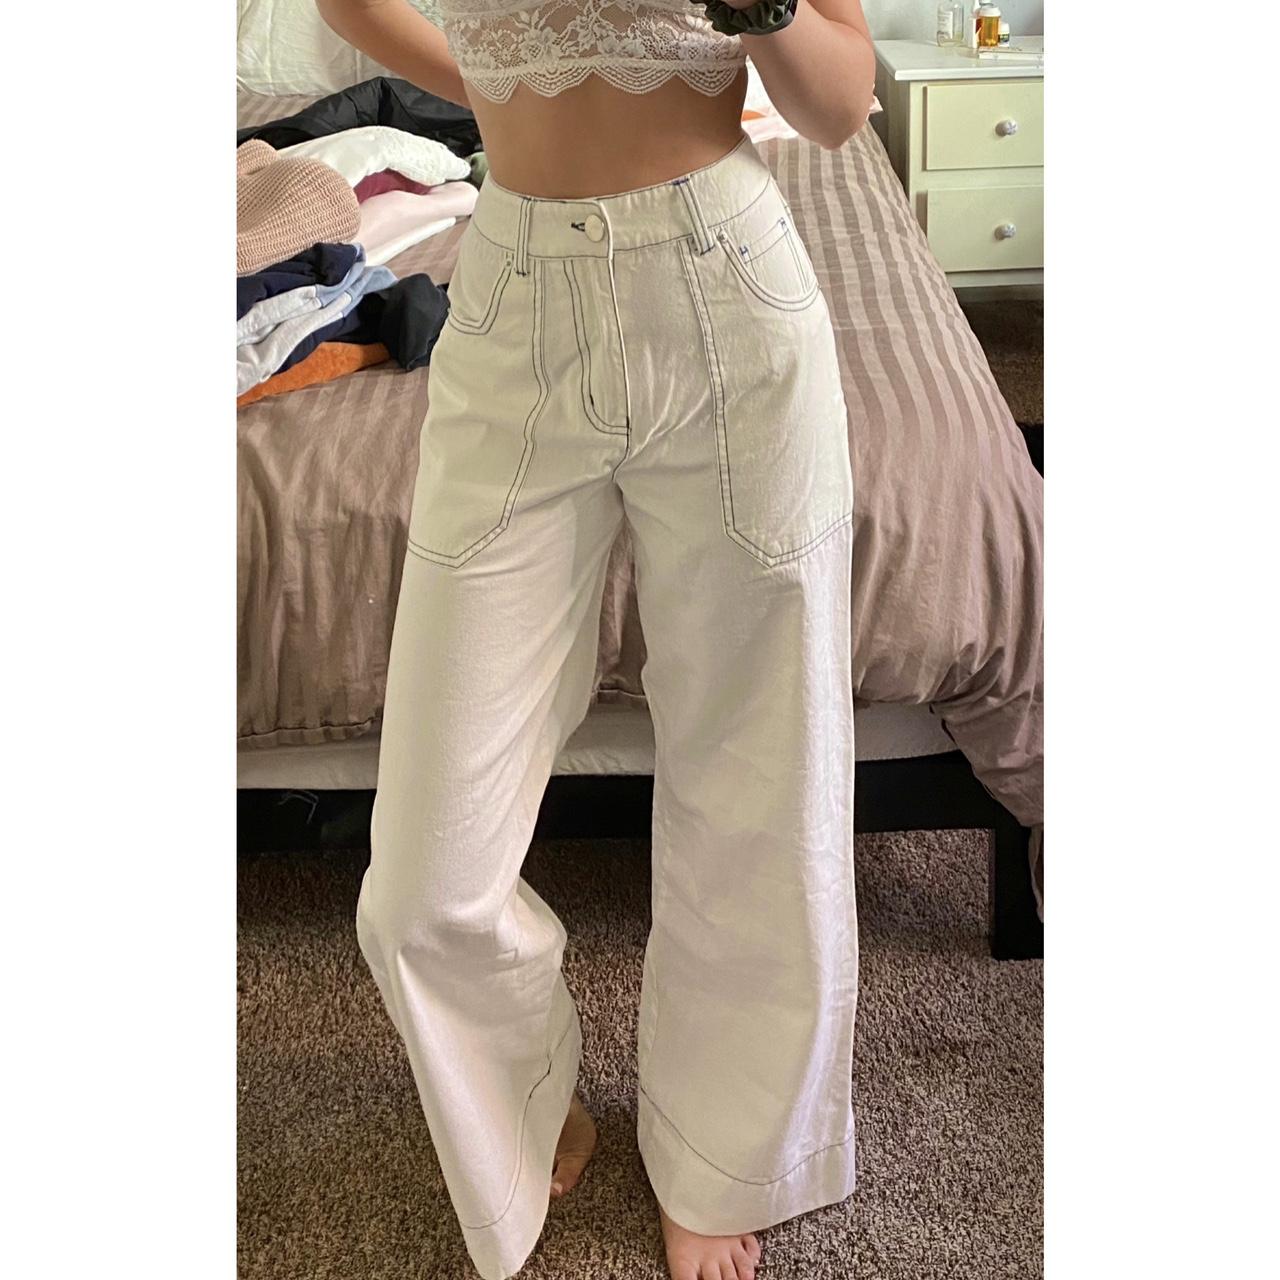 LF Markey  Women's White and Tan Jeans